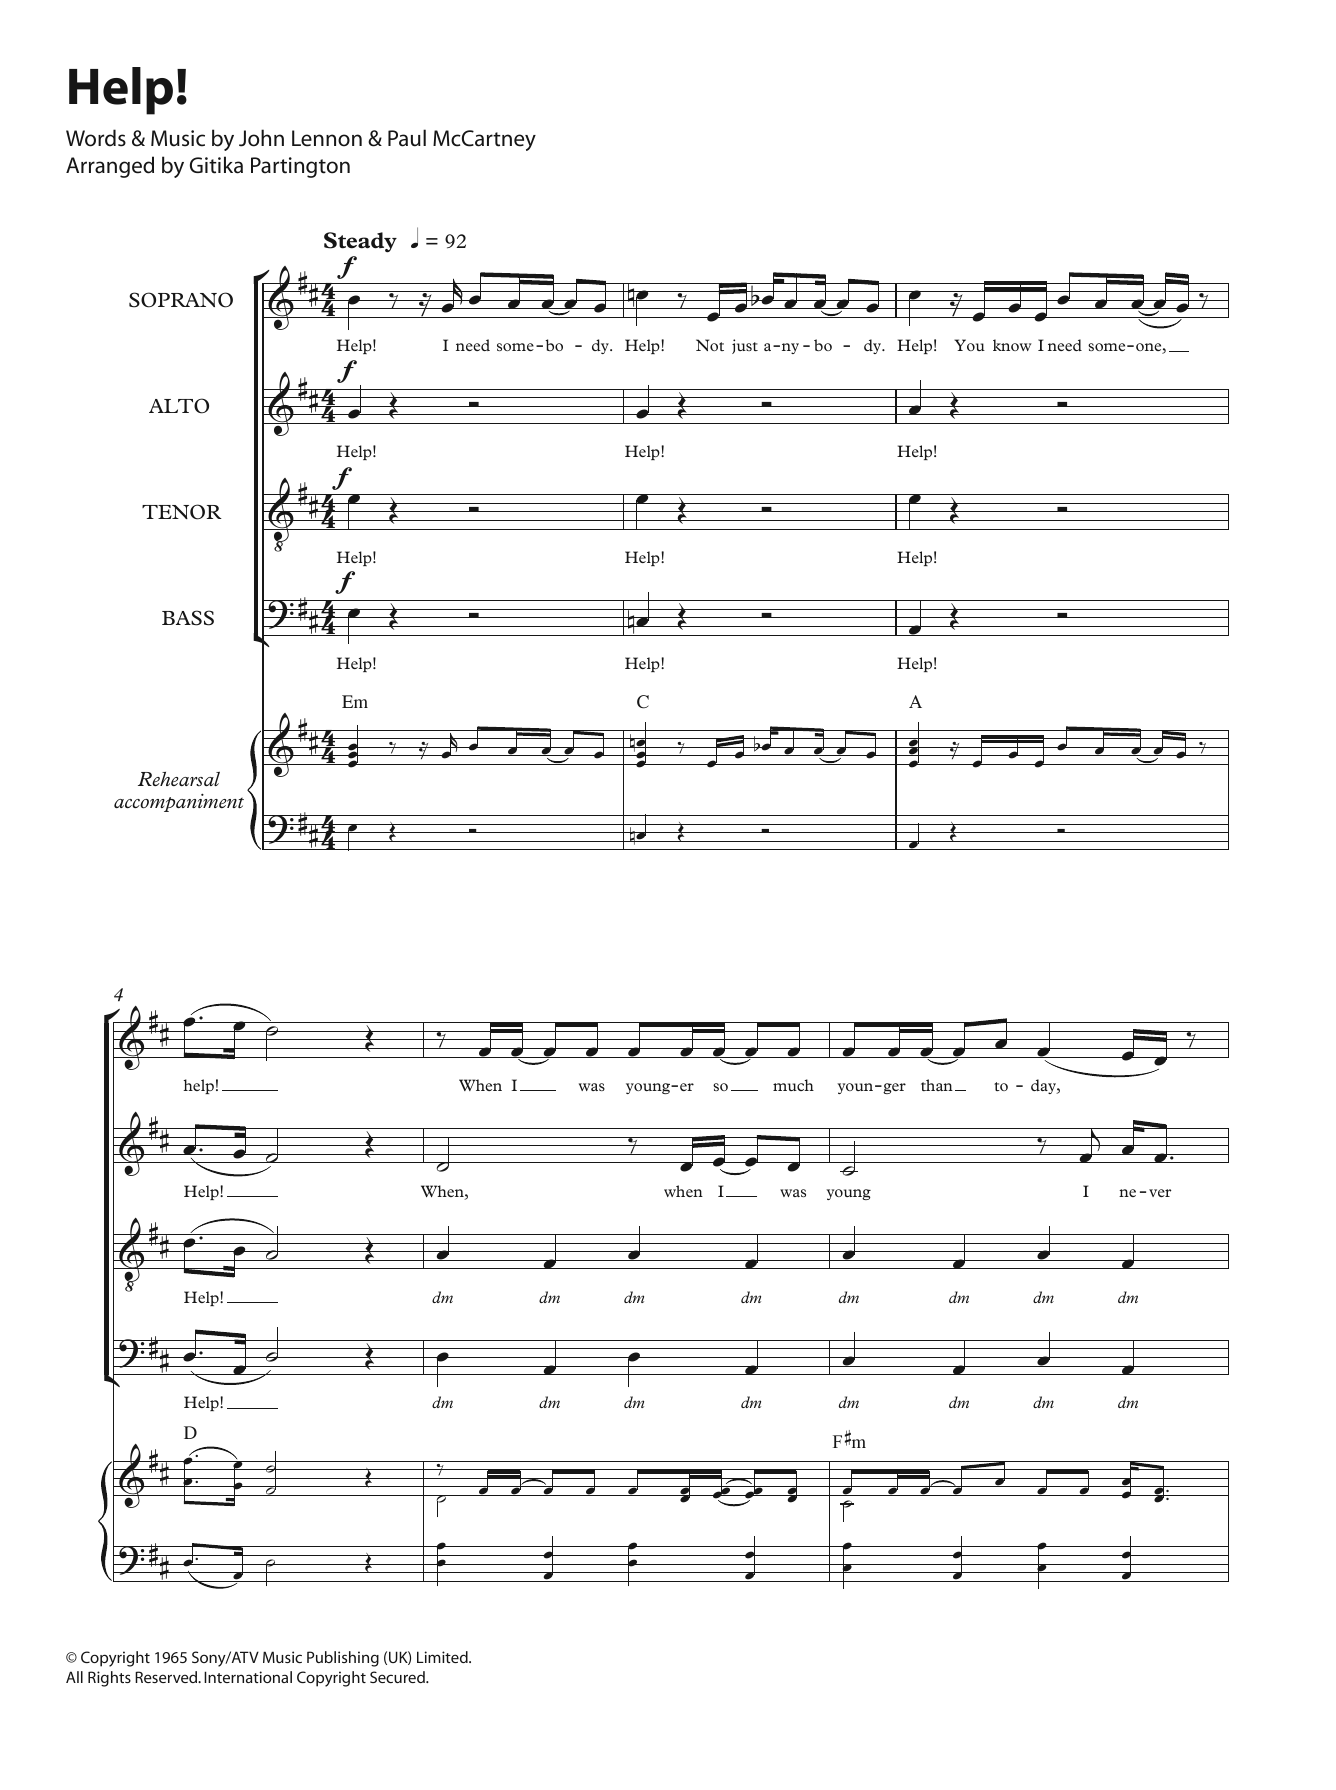 The Beatles Help! (arr. Gitika Partington) Sheet Music Notes & Chords for SATB - Download or Print PDF